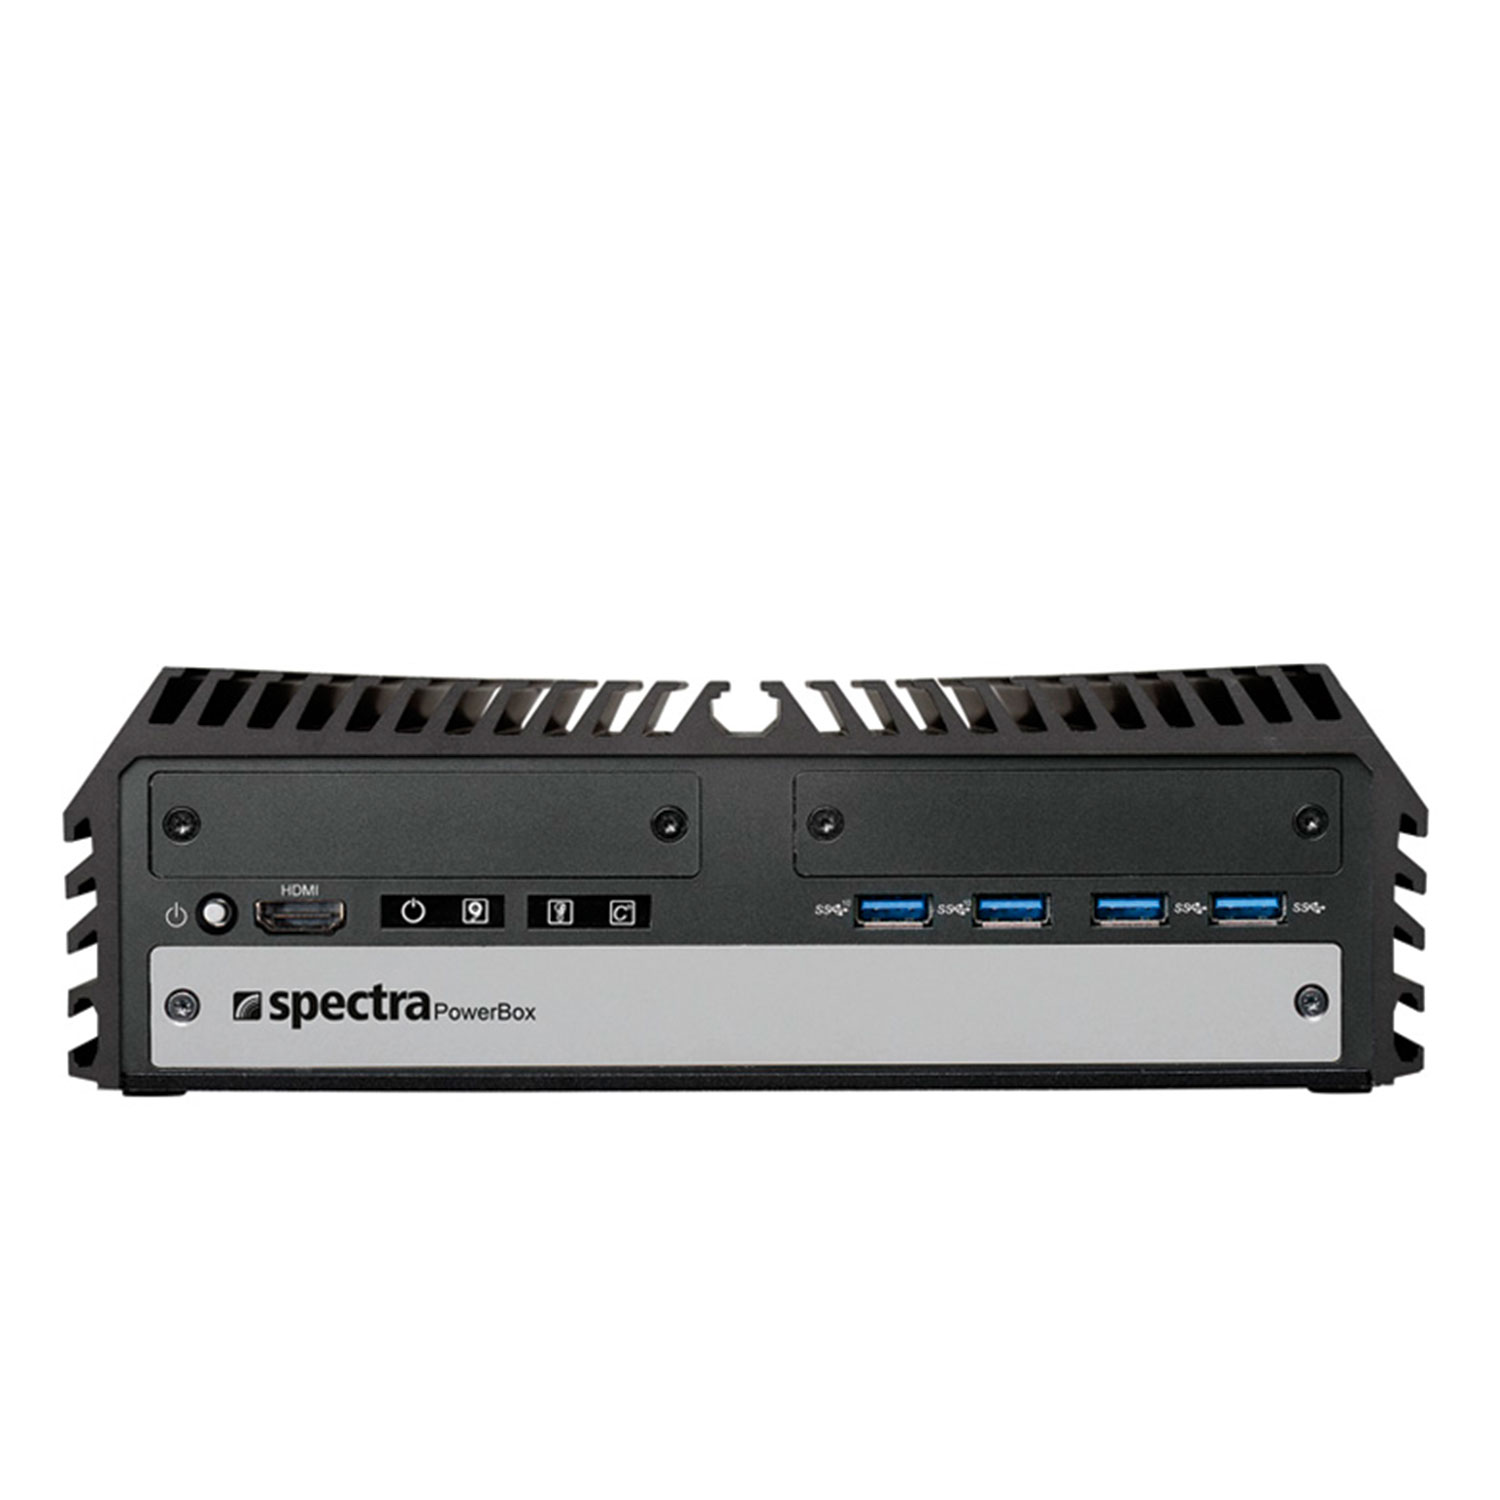 Spectra PowerBox 420 Mini PC 01